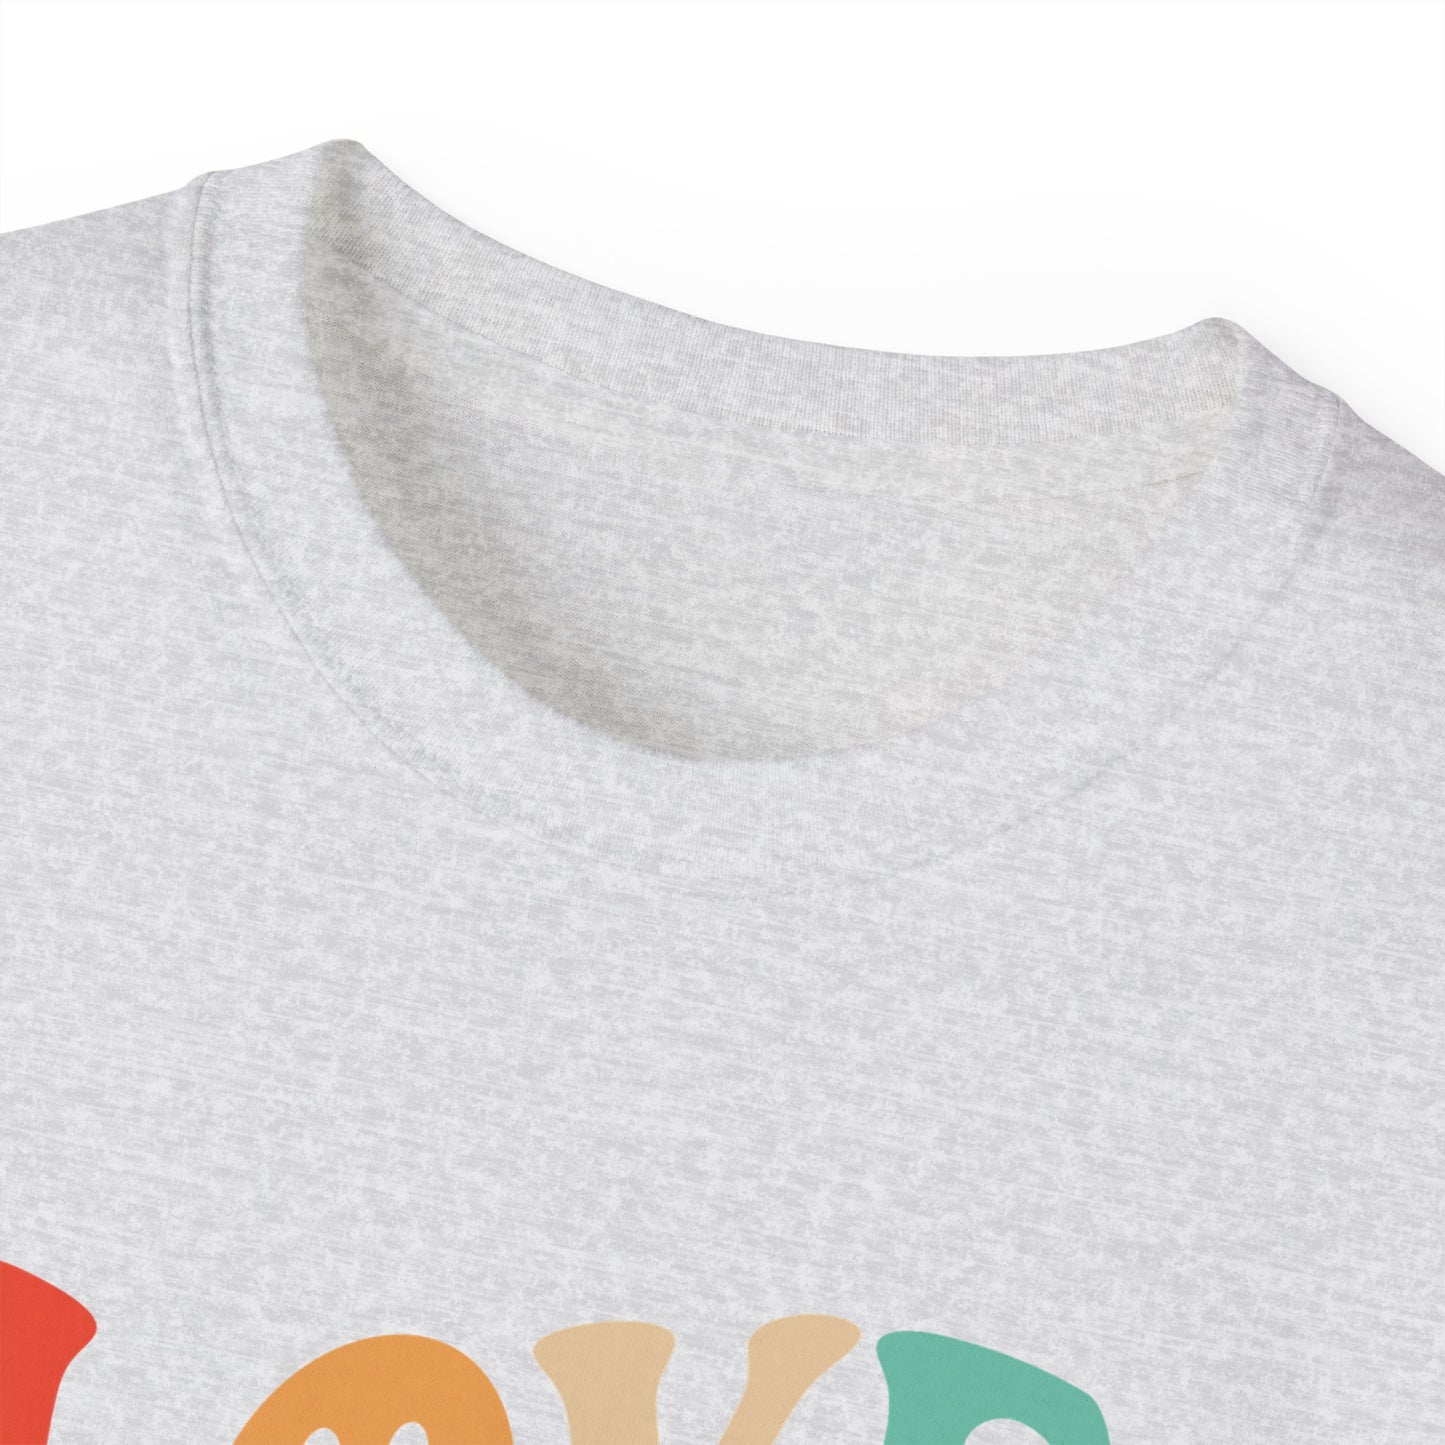 Love Like Jesus Women's Christian T-shirt Printify